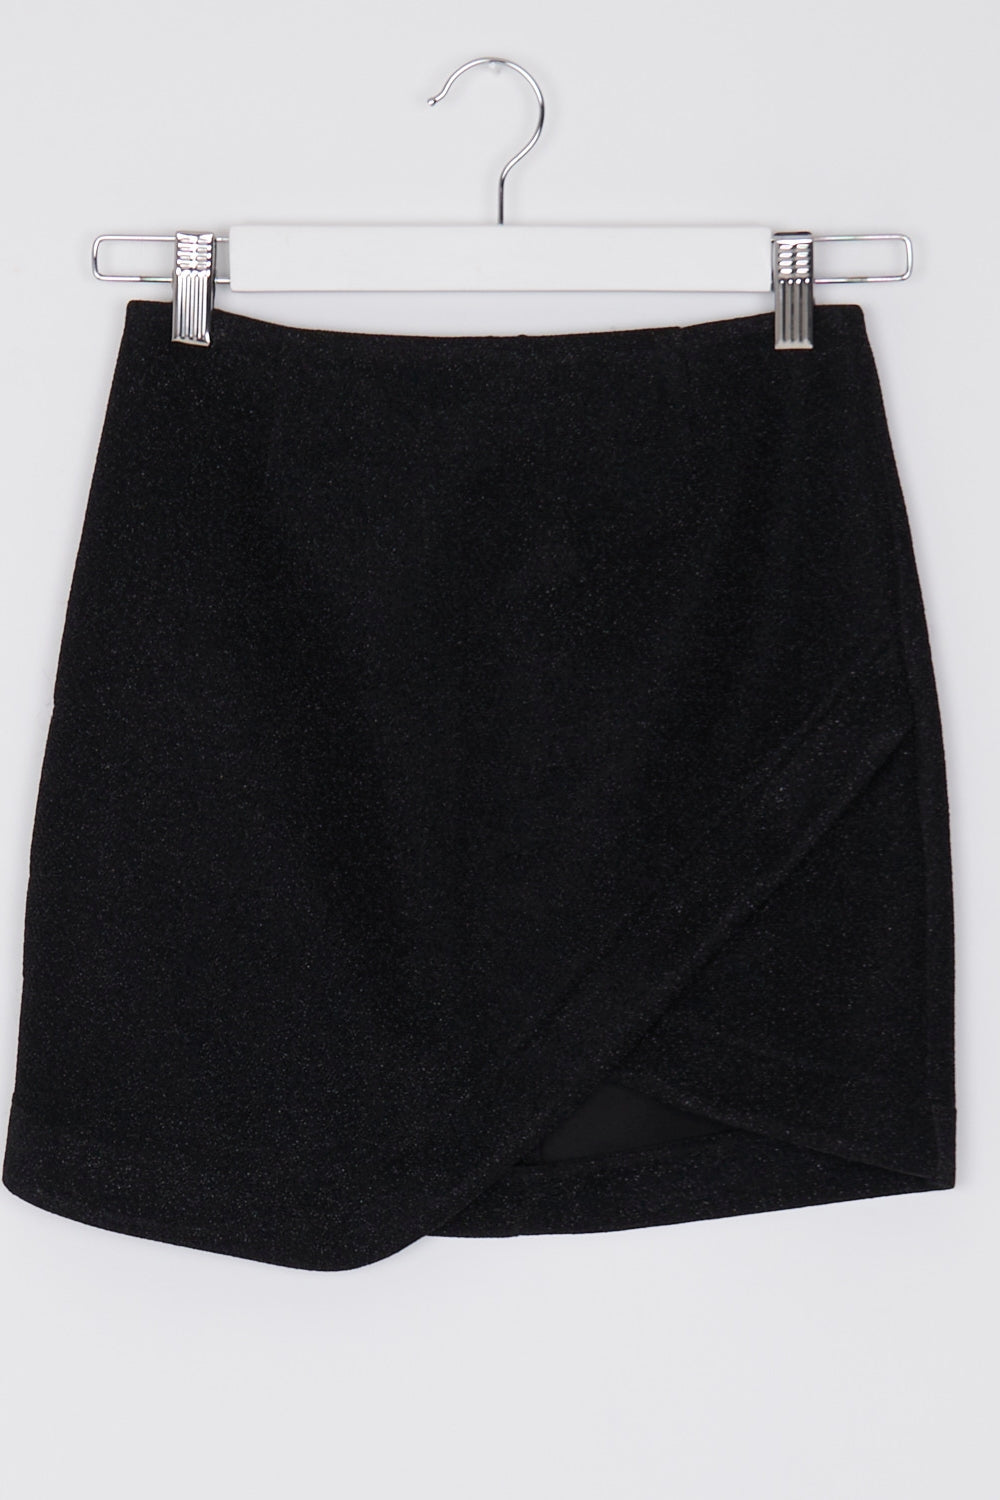 Bardot Black Wrap Skirt 6